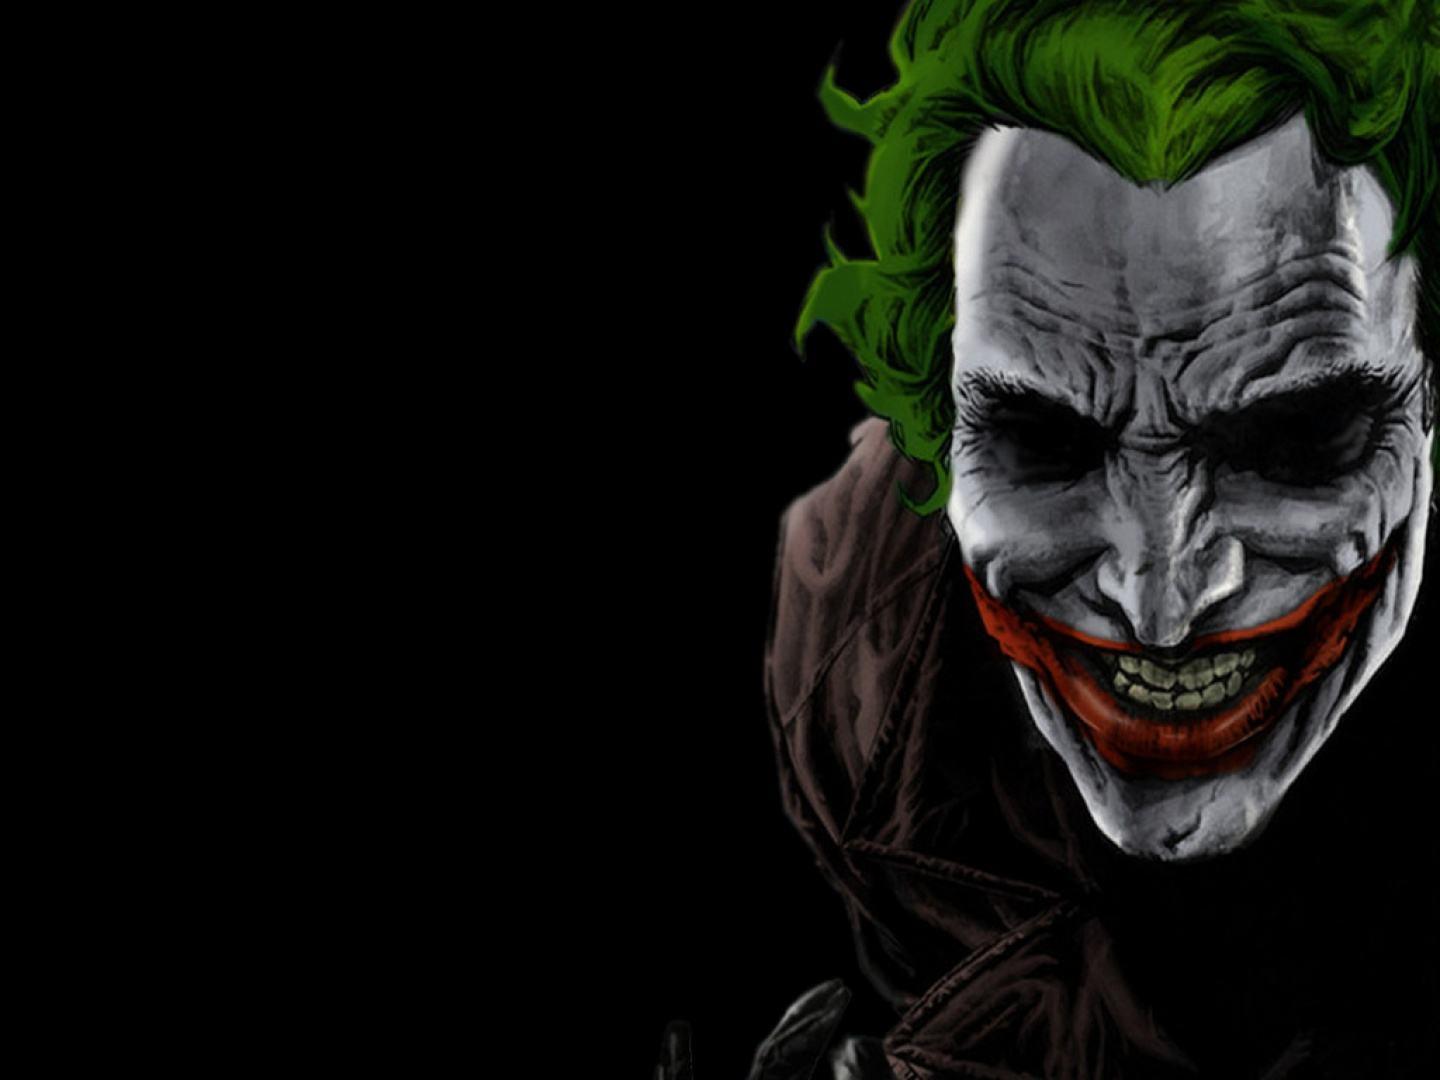 Wallpaper Joker Mis Imagenes Del Guason Batman Ngh Sick Taringa